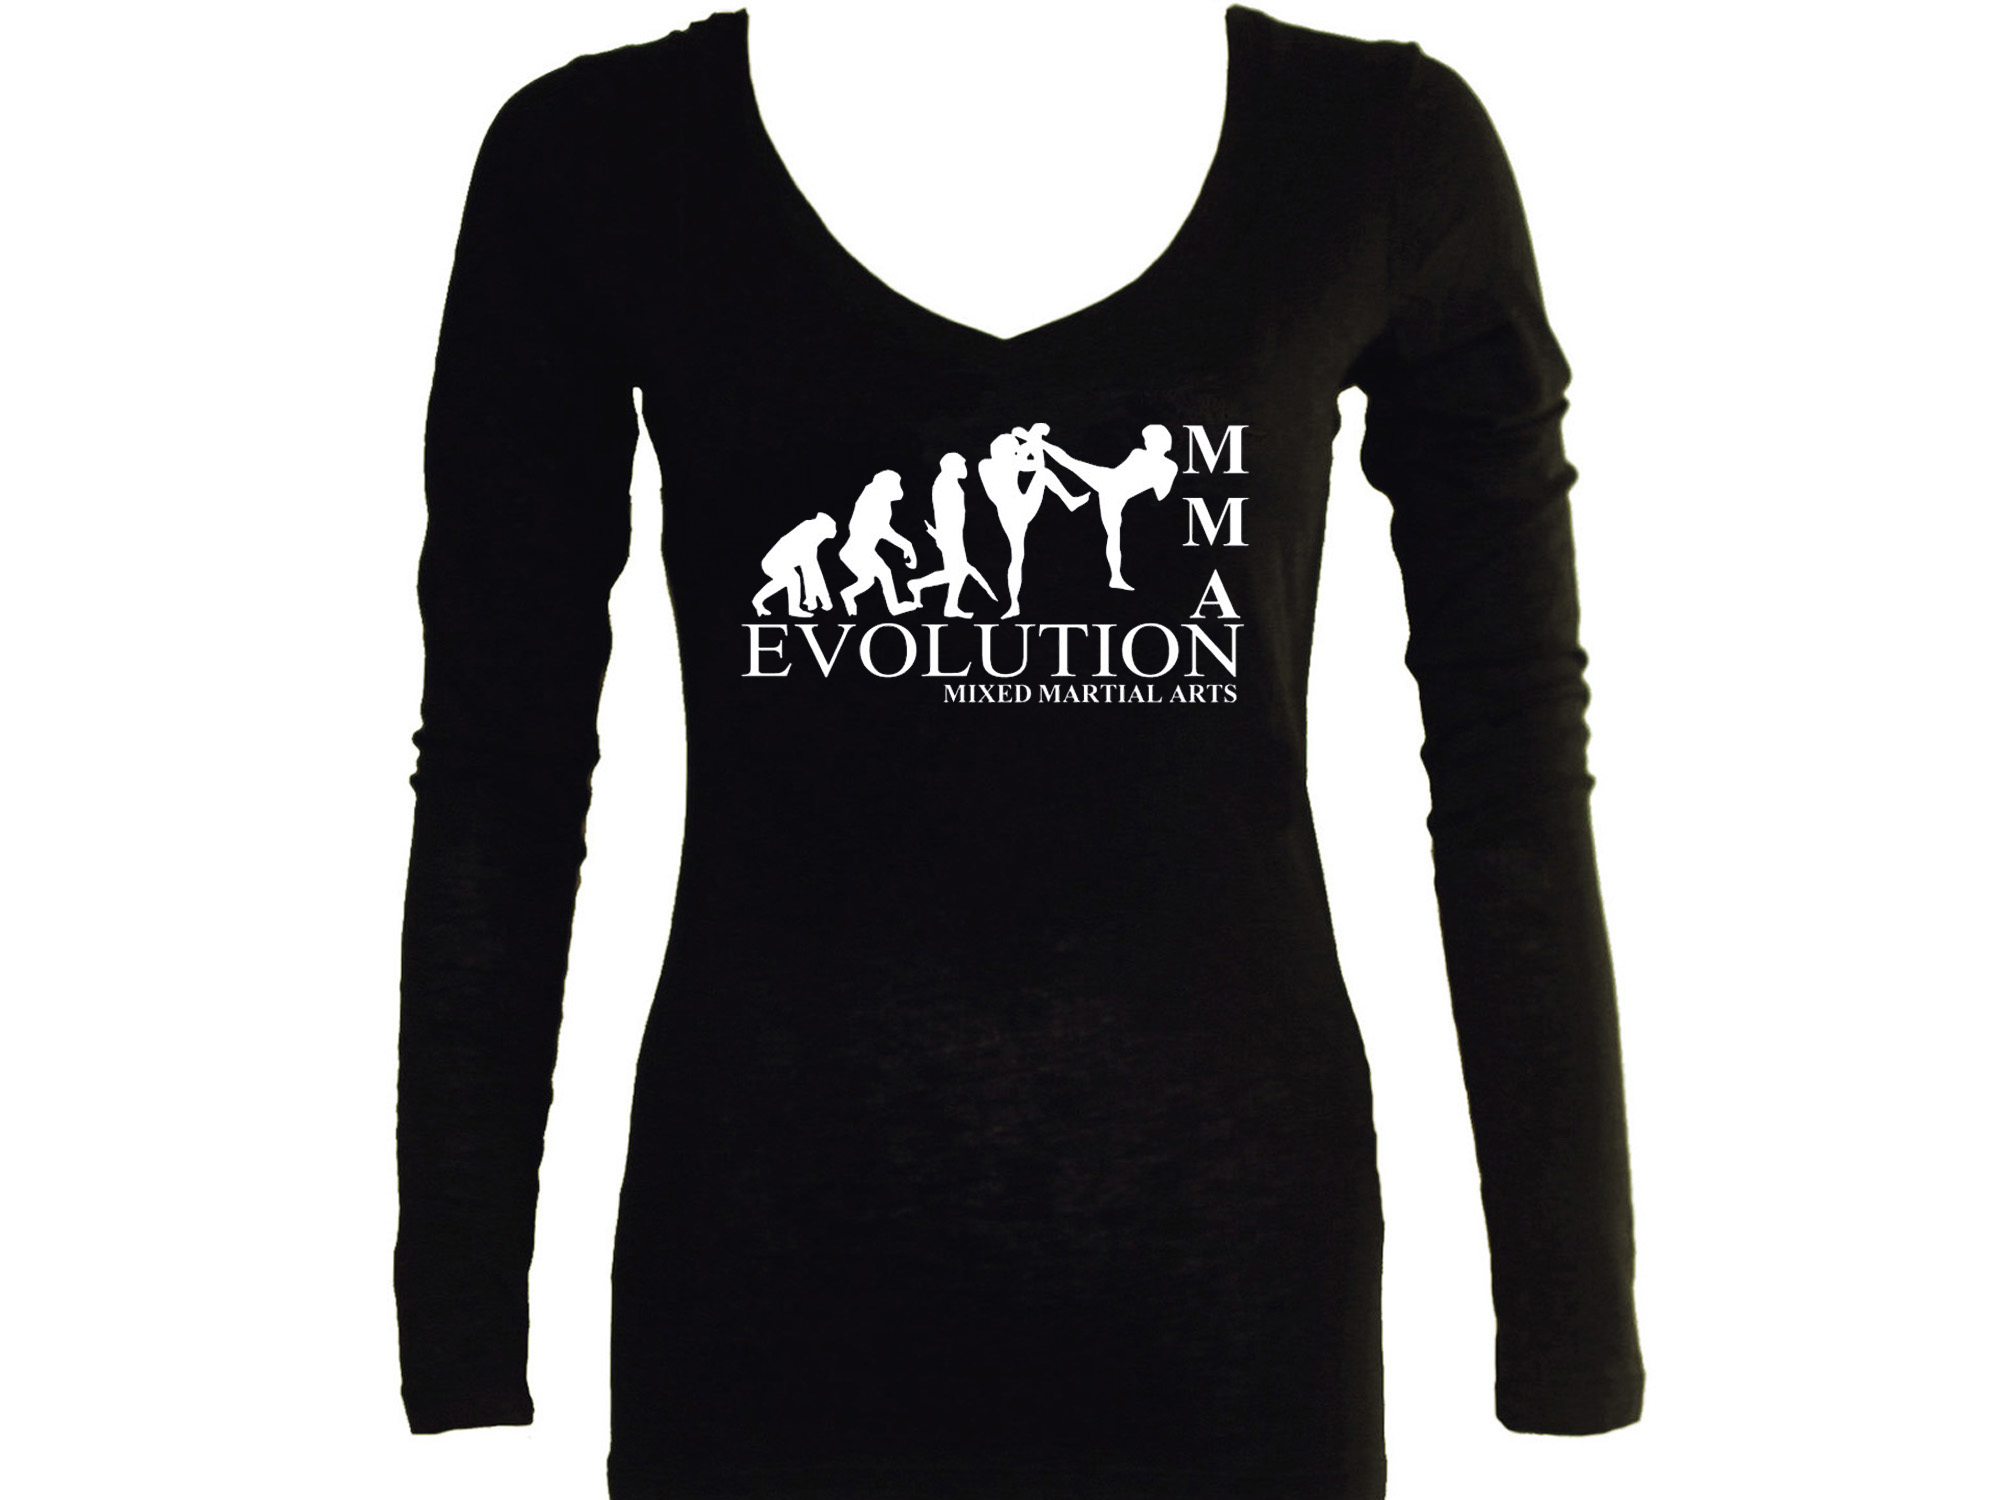 MMA evolution mixed martial arts women or junior sleeved t-shirt